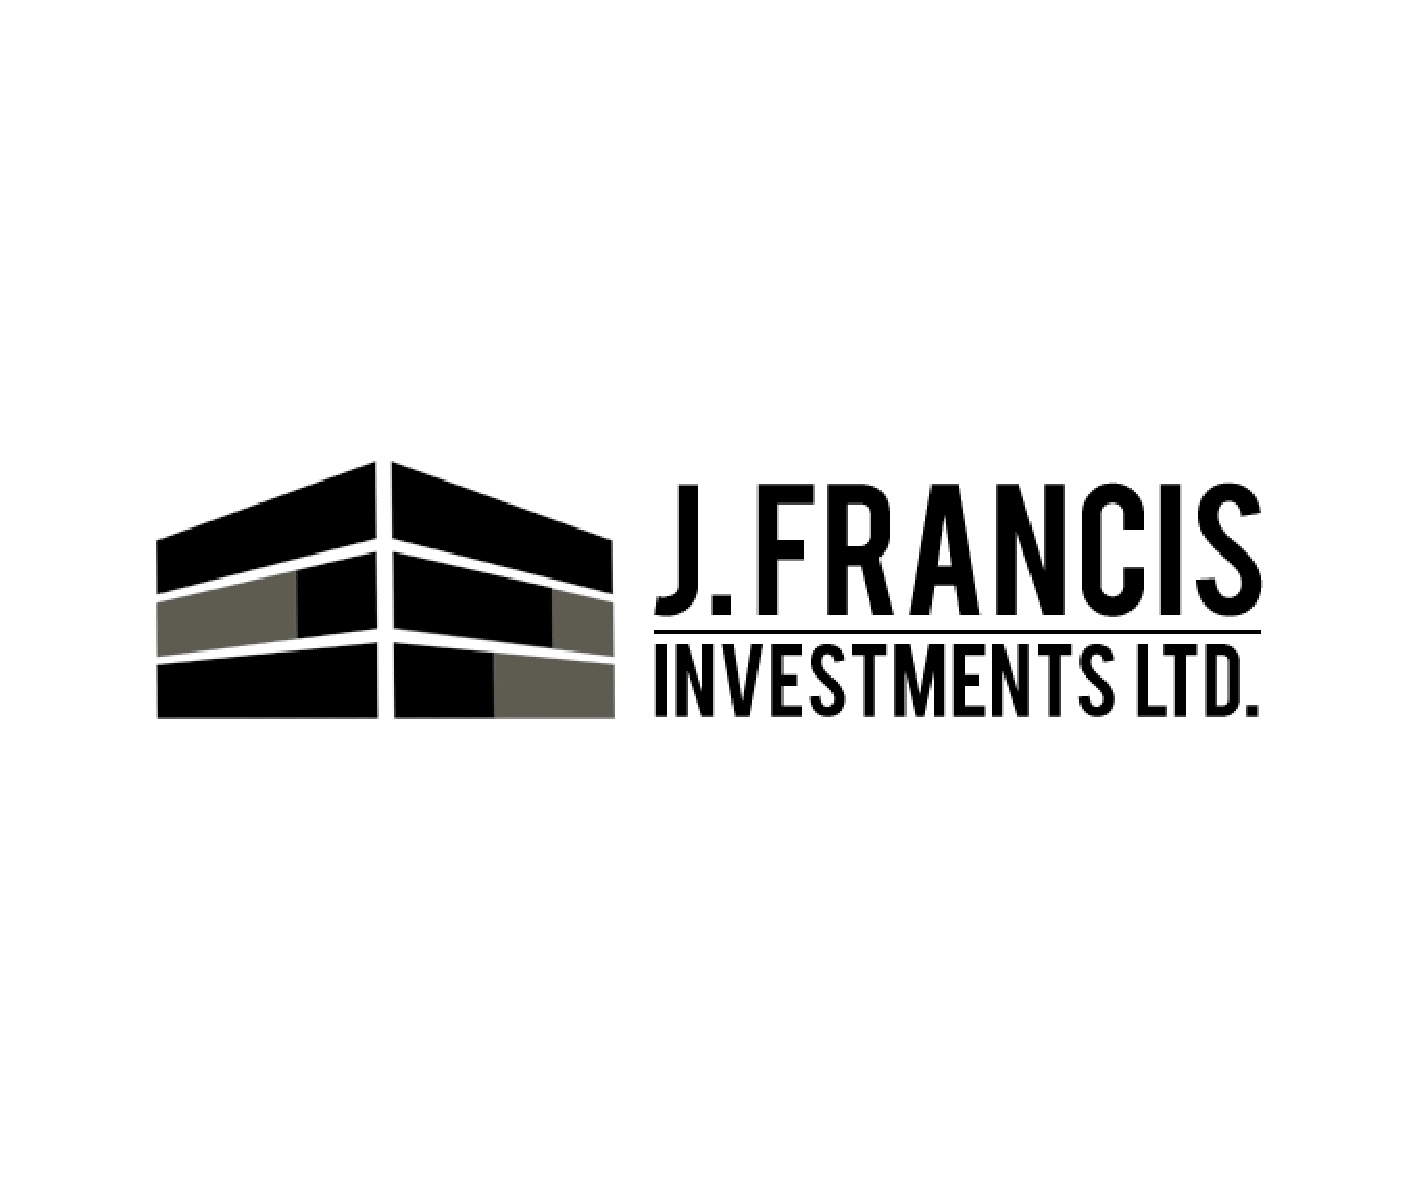 J. Francis Investments LTD